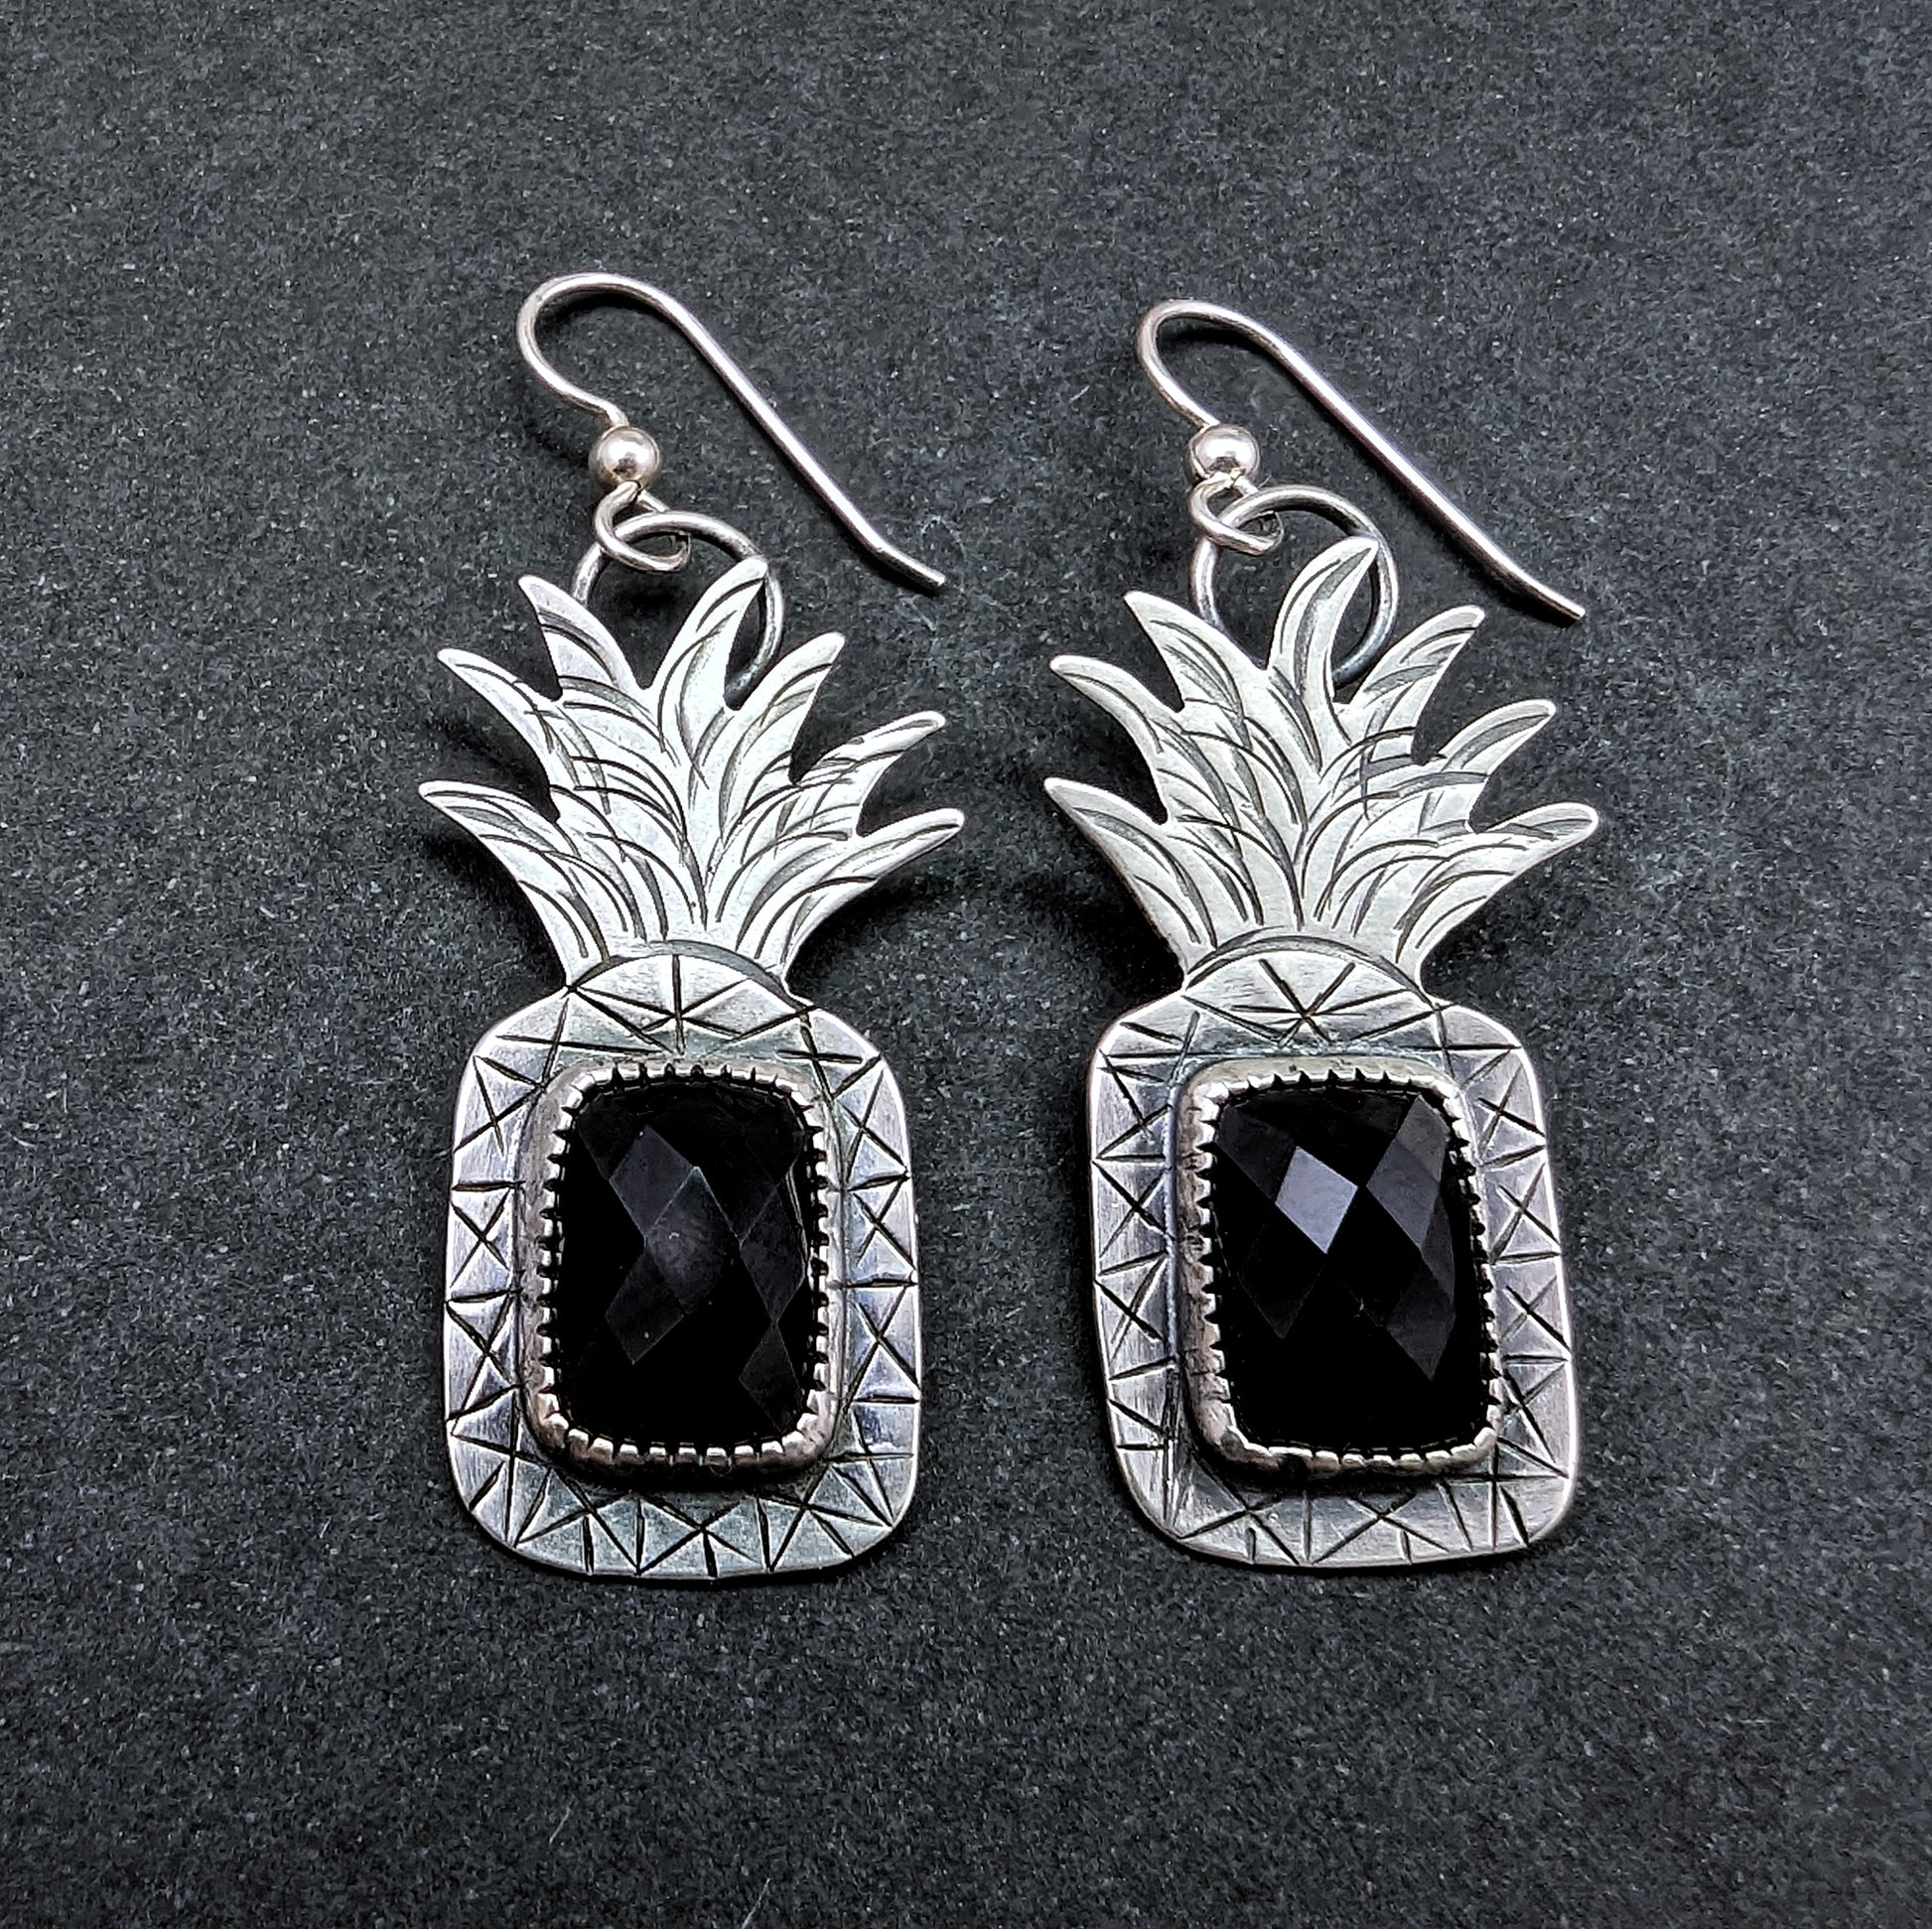 Sterling silver pineapple earrings with rectangular rosecut black onyx